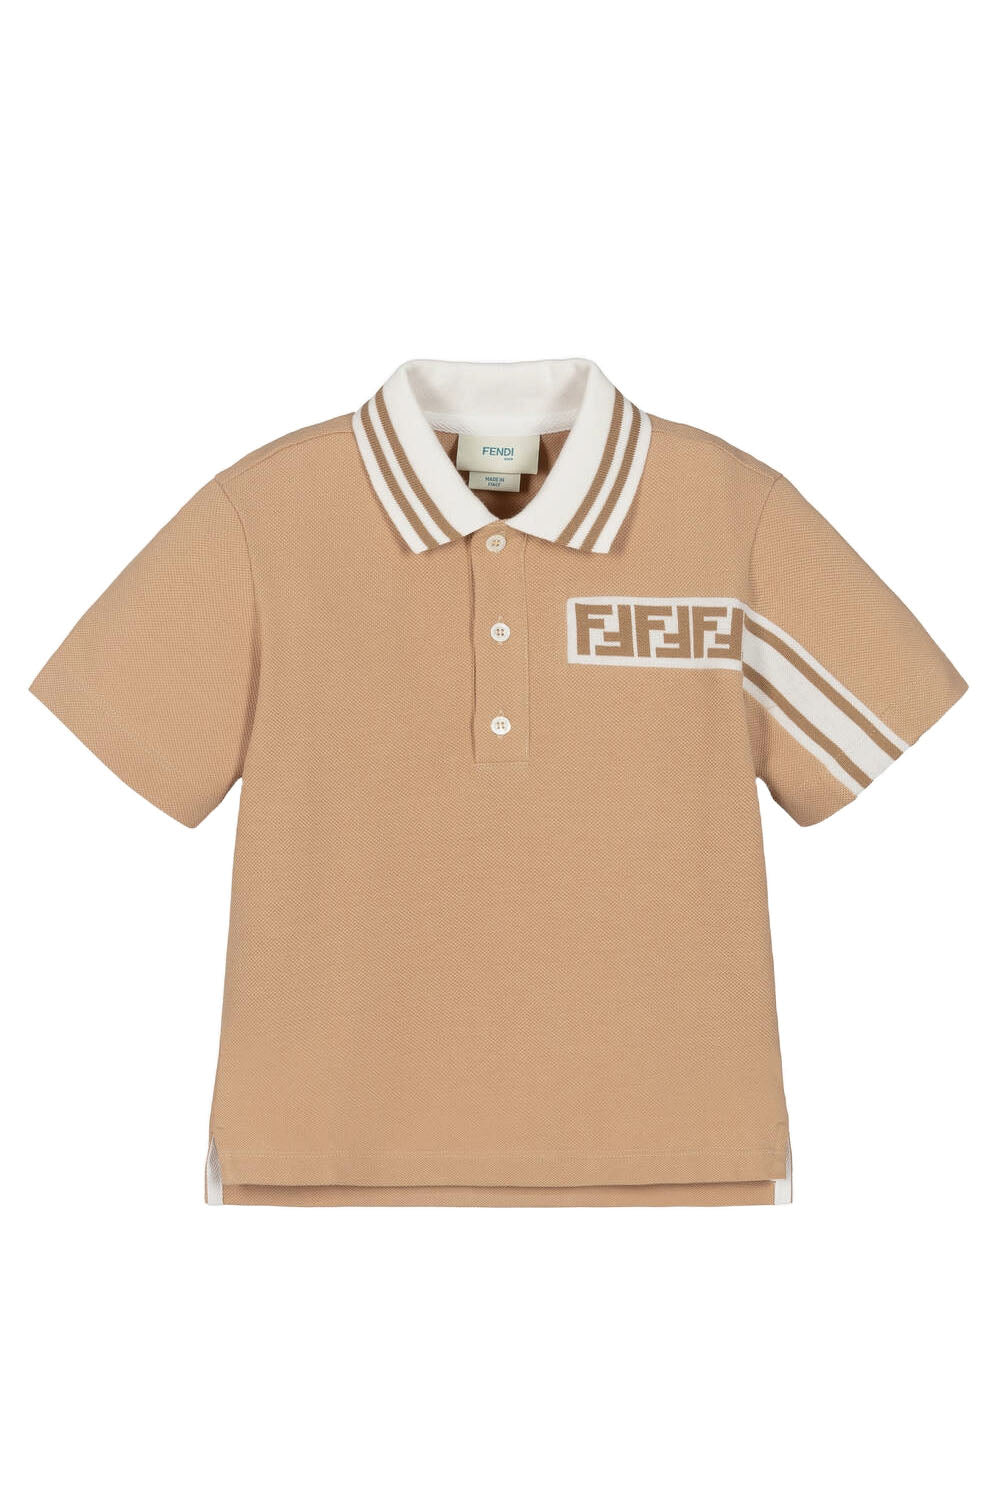 Fendi Logo Polo Shirt for Boys Fendi Logo Polo Shirt for Boys Fendi Logo Polo Shirt for Boys Maison7